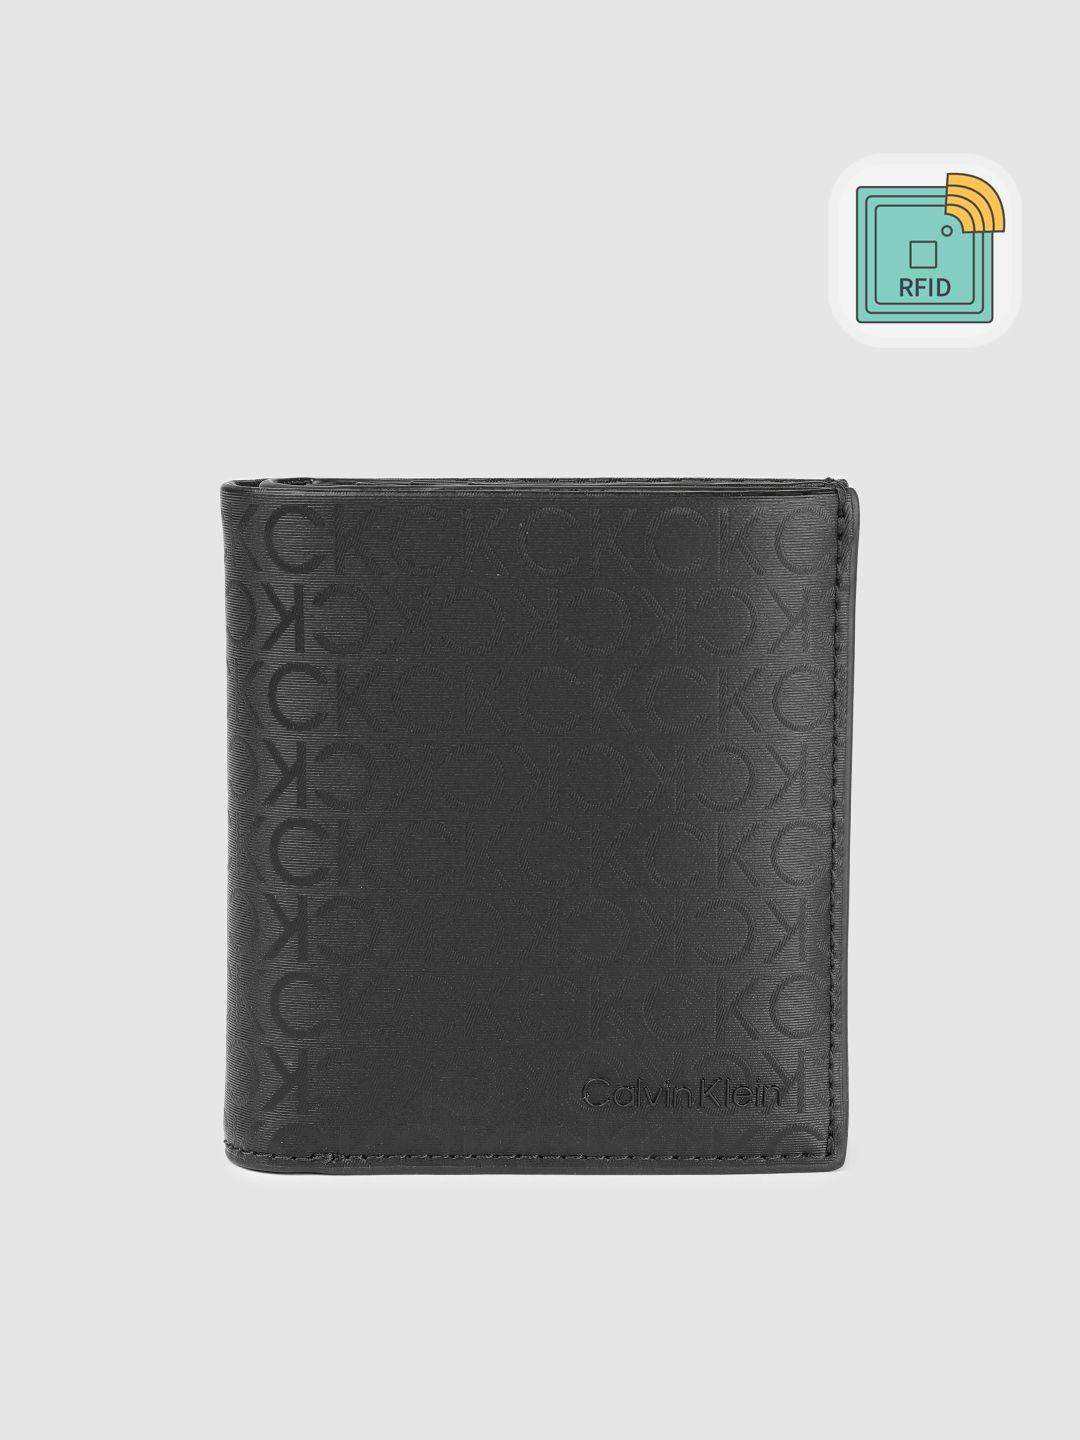 calvin klein men brand logo print two fold wallet with rfid